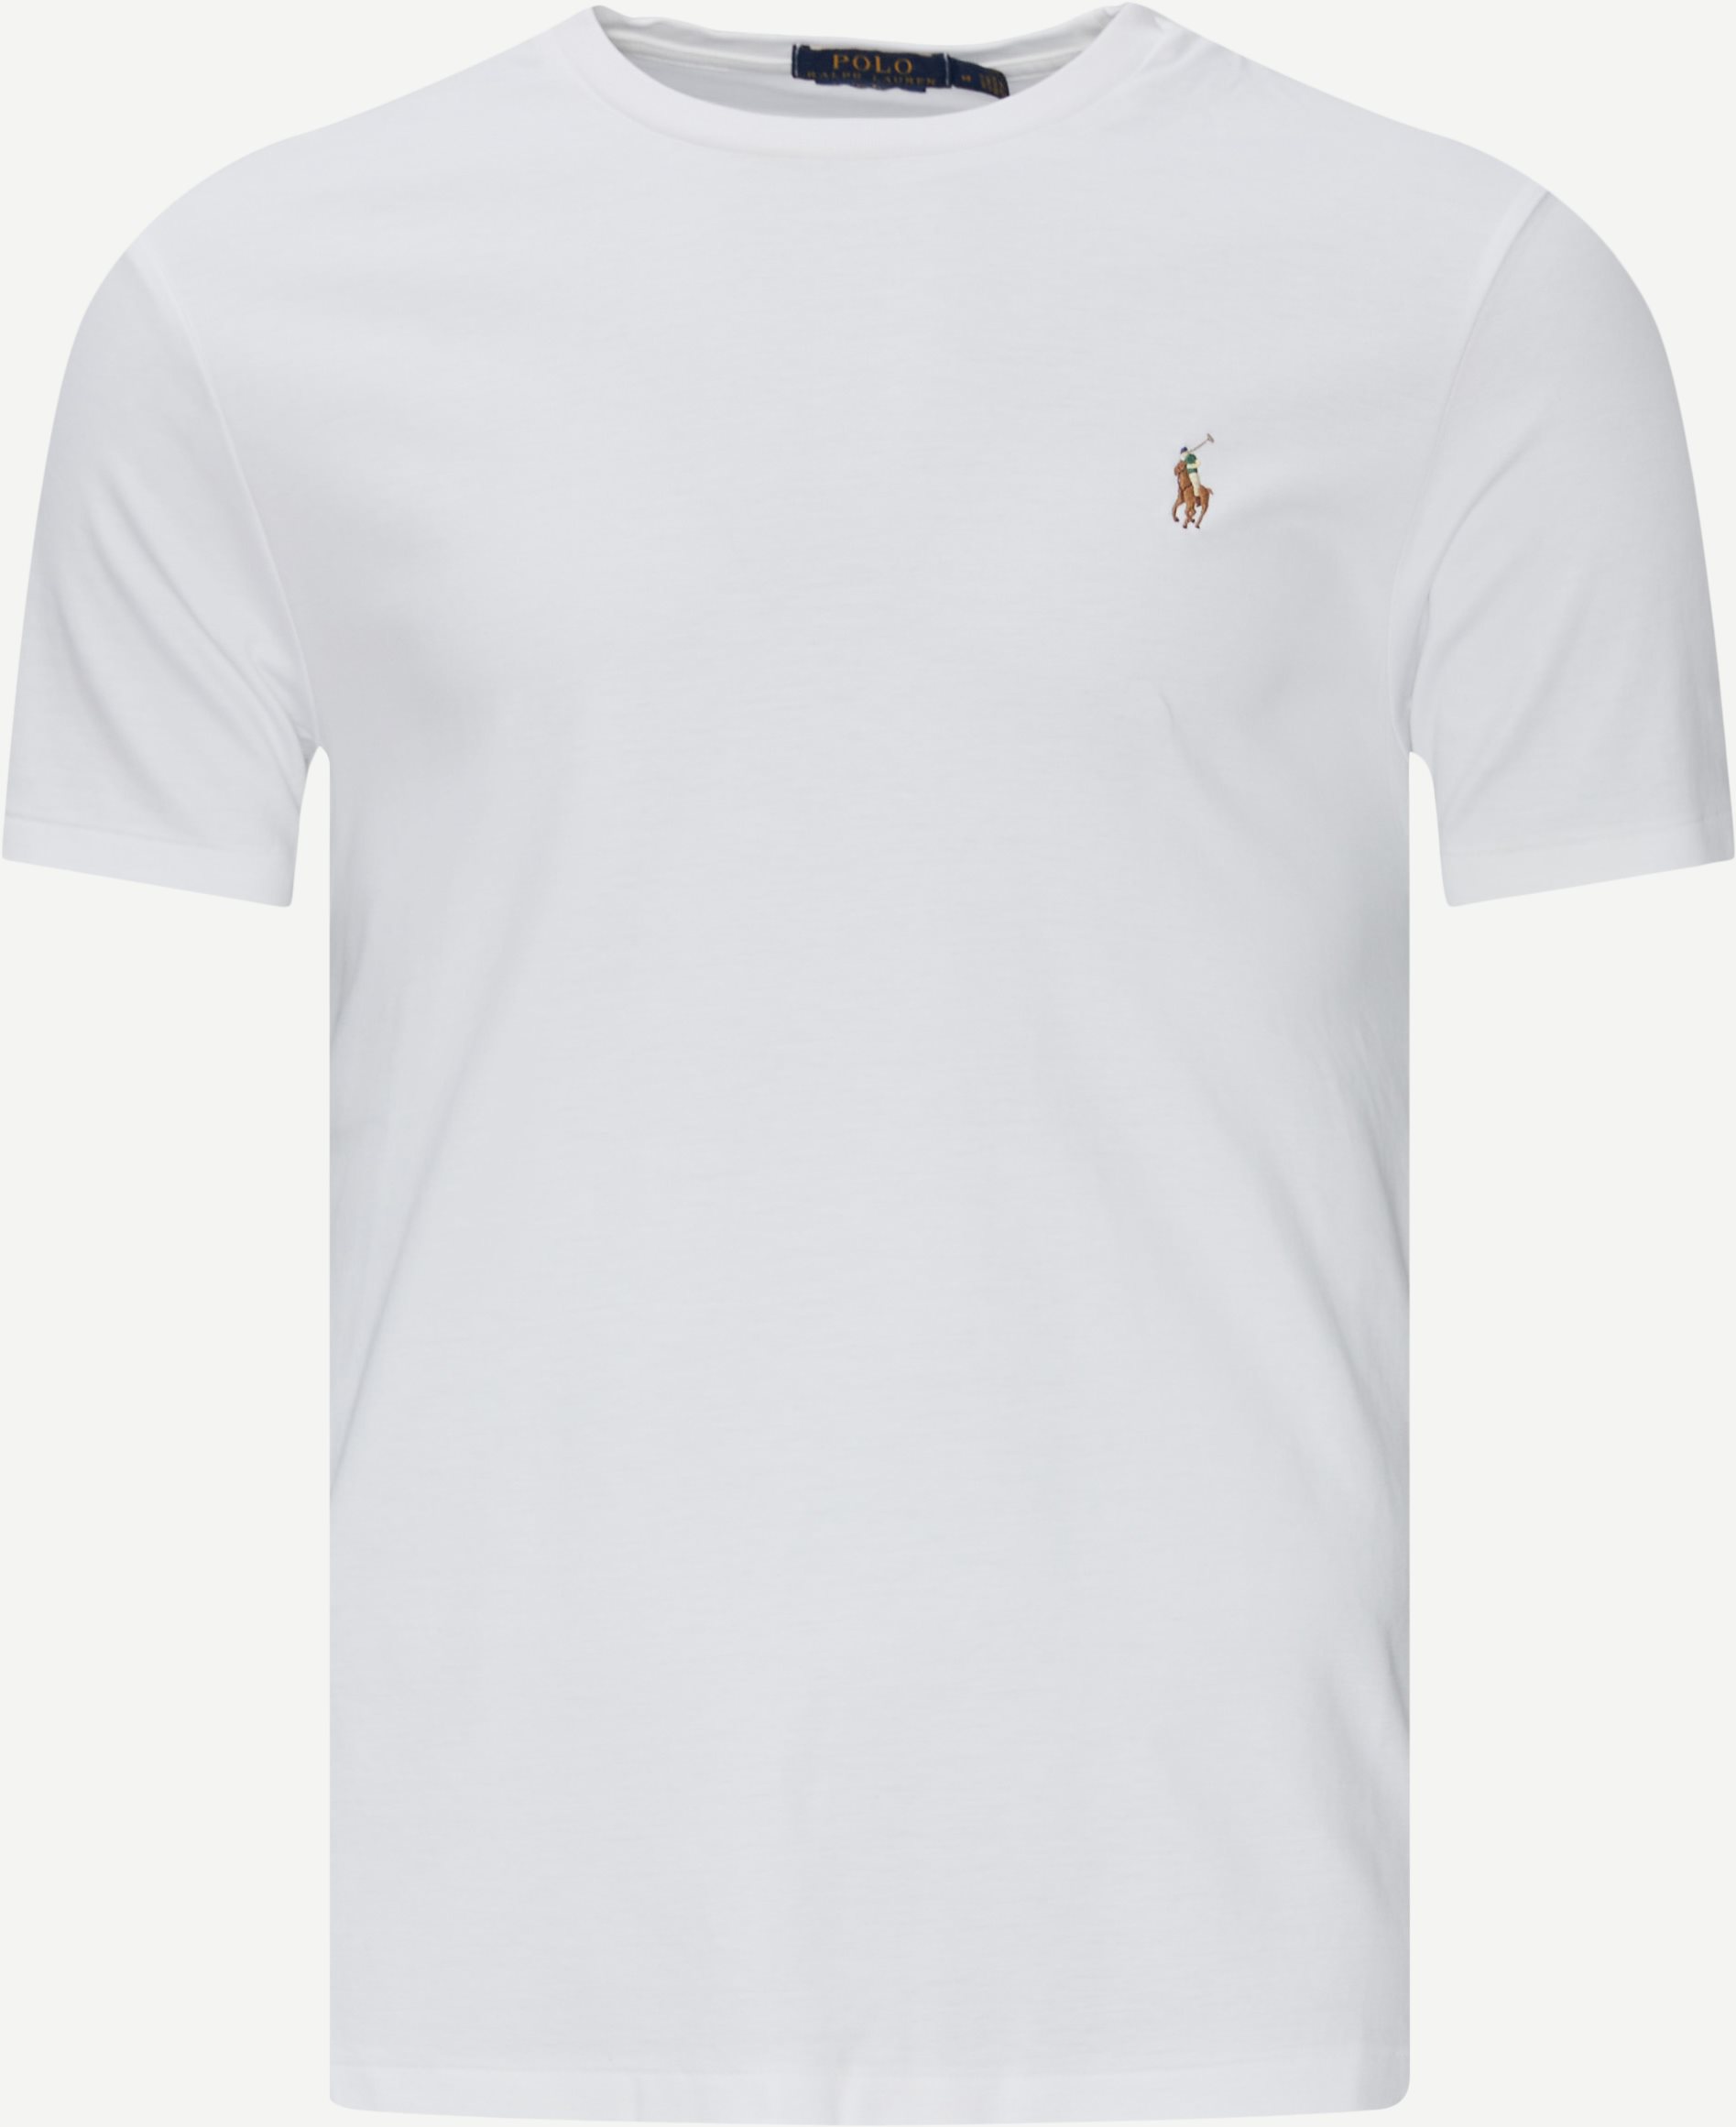 T-shirts - Regular slim fit - White